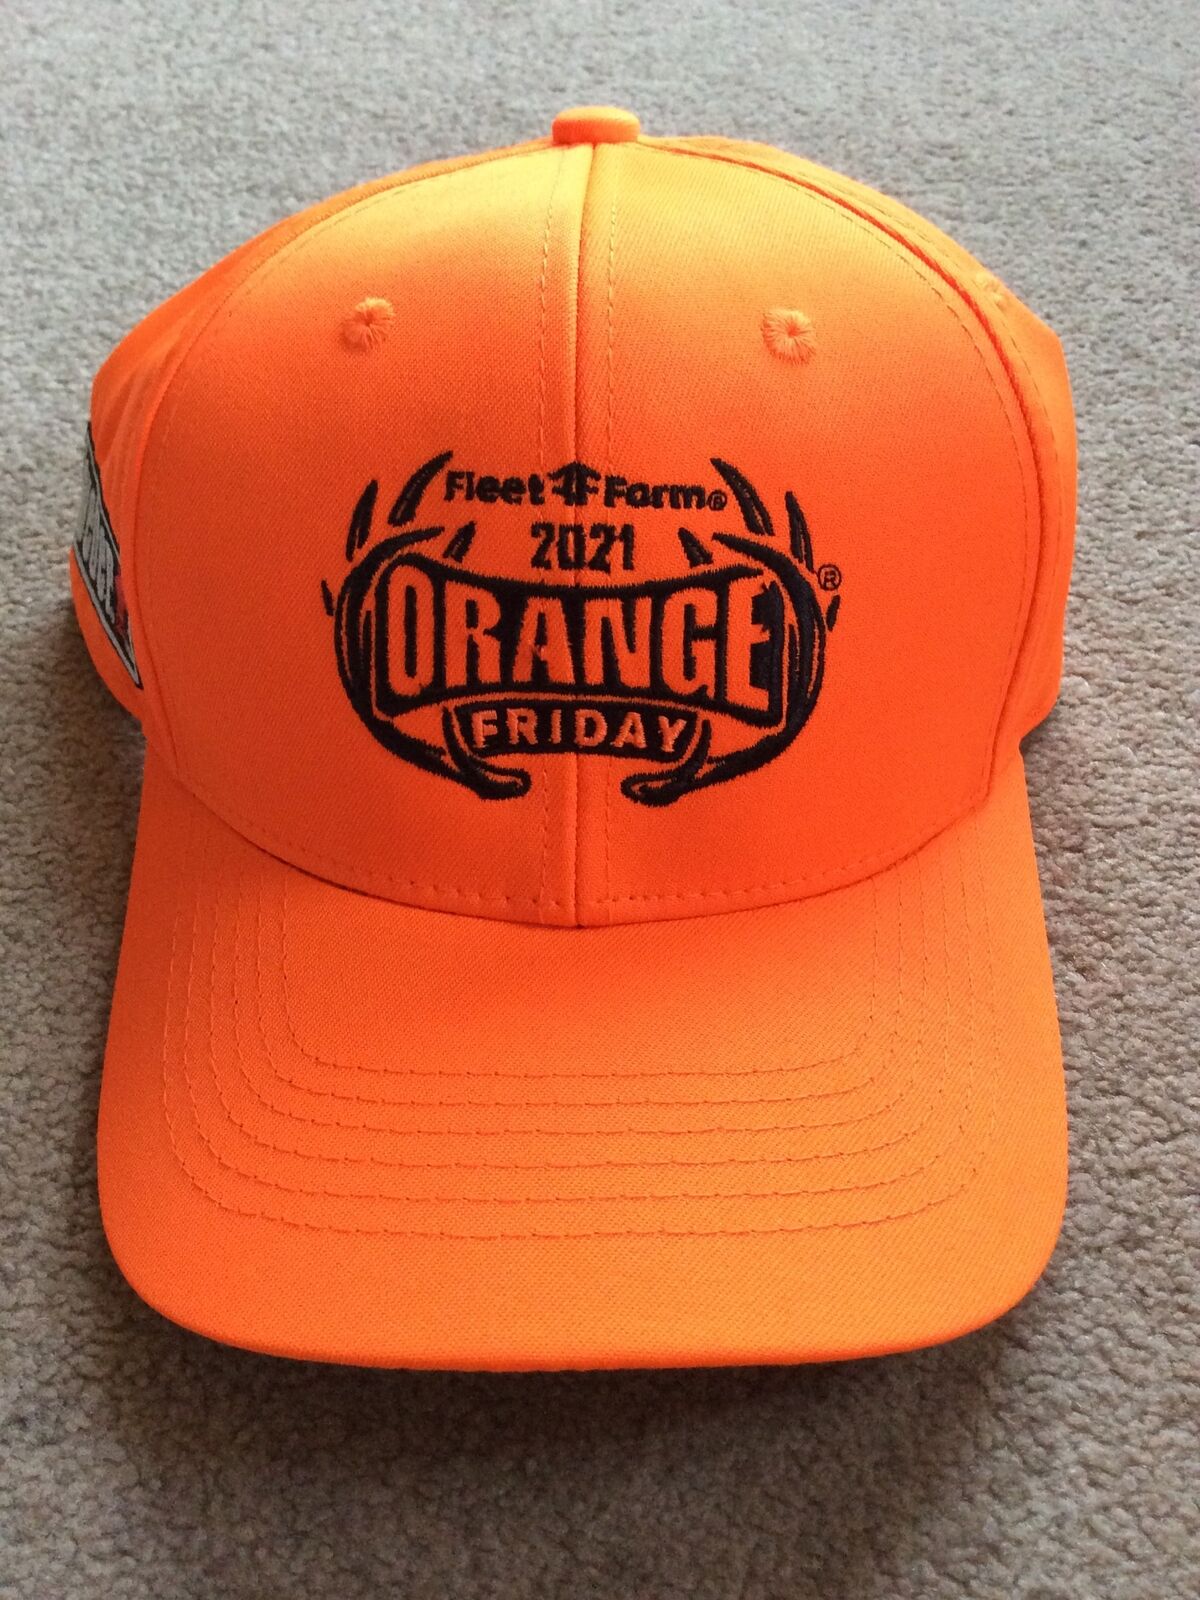 Fleet Farm 2021 Orange Friday Hat Japan Maker Award-winning store New Blaze Outdoor C Hunting